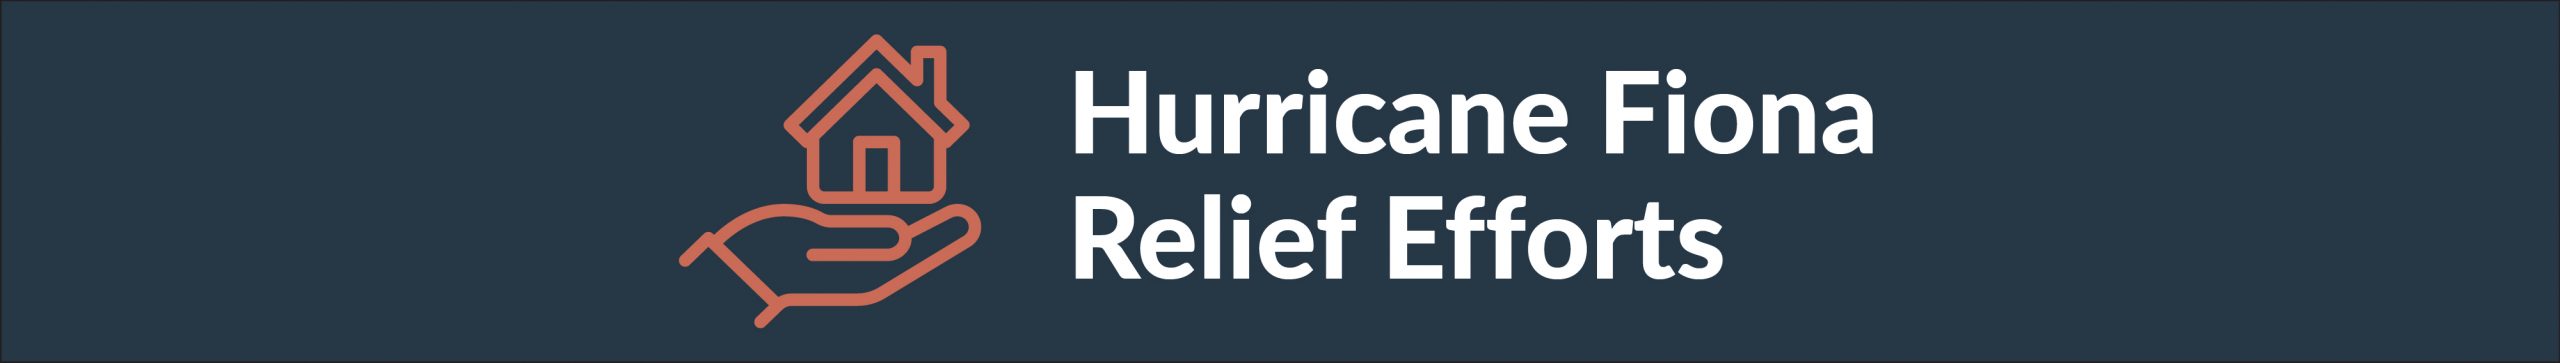 Hurricane Fiona Relief Efforts